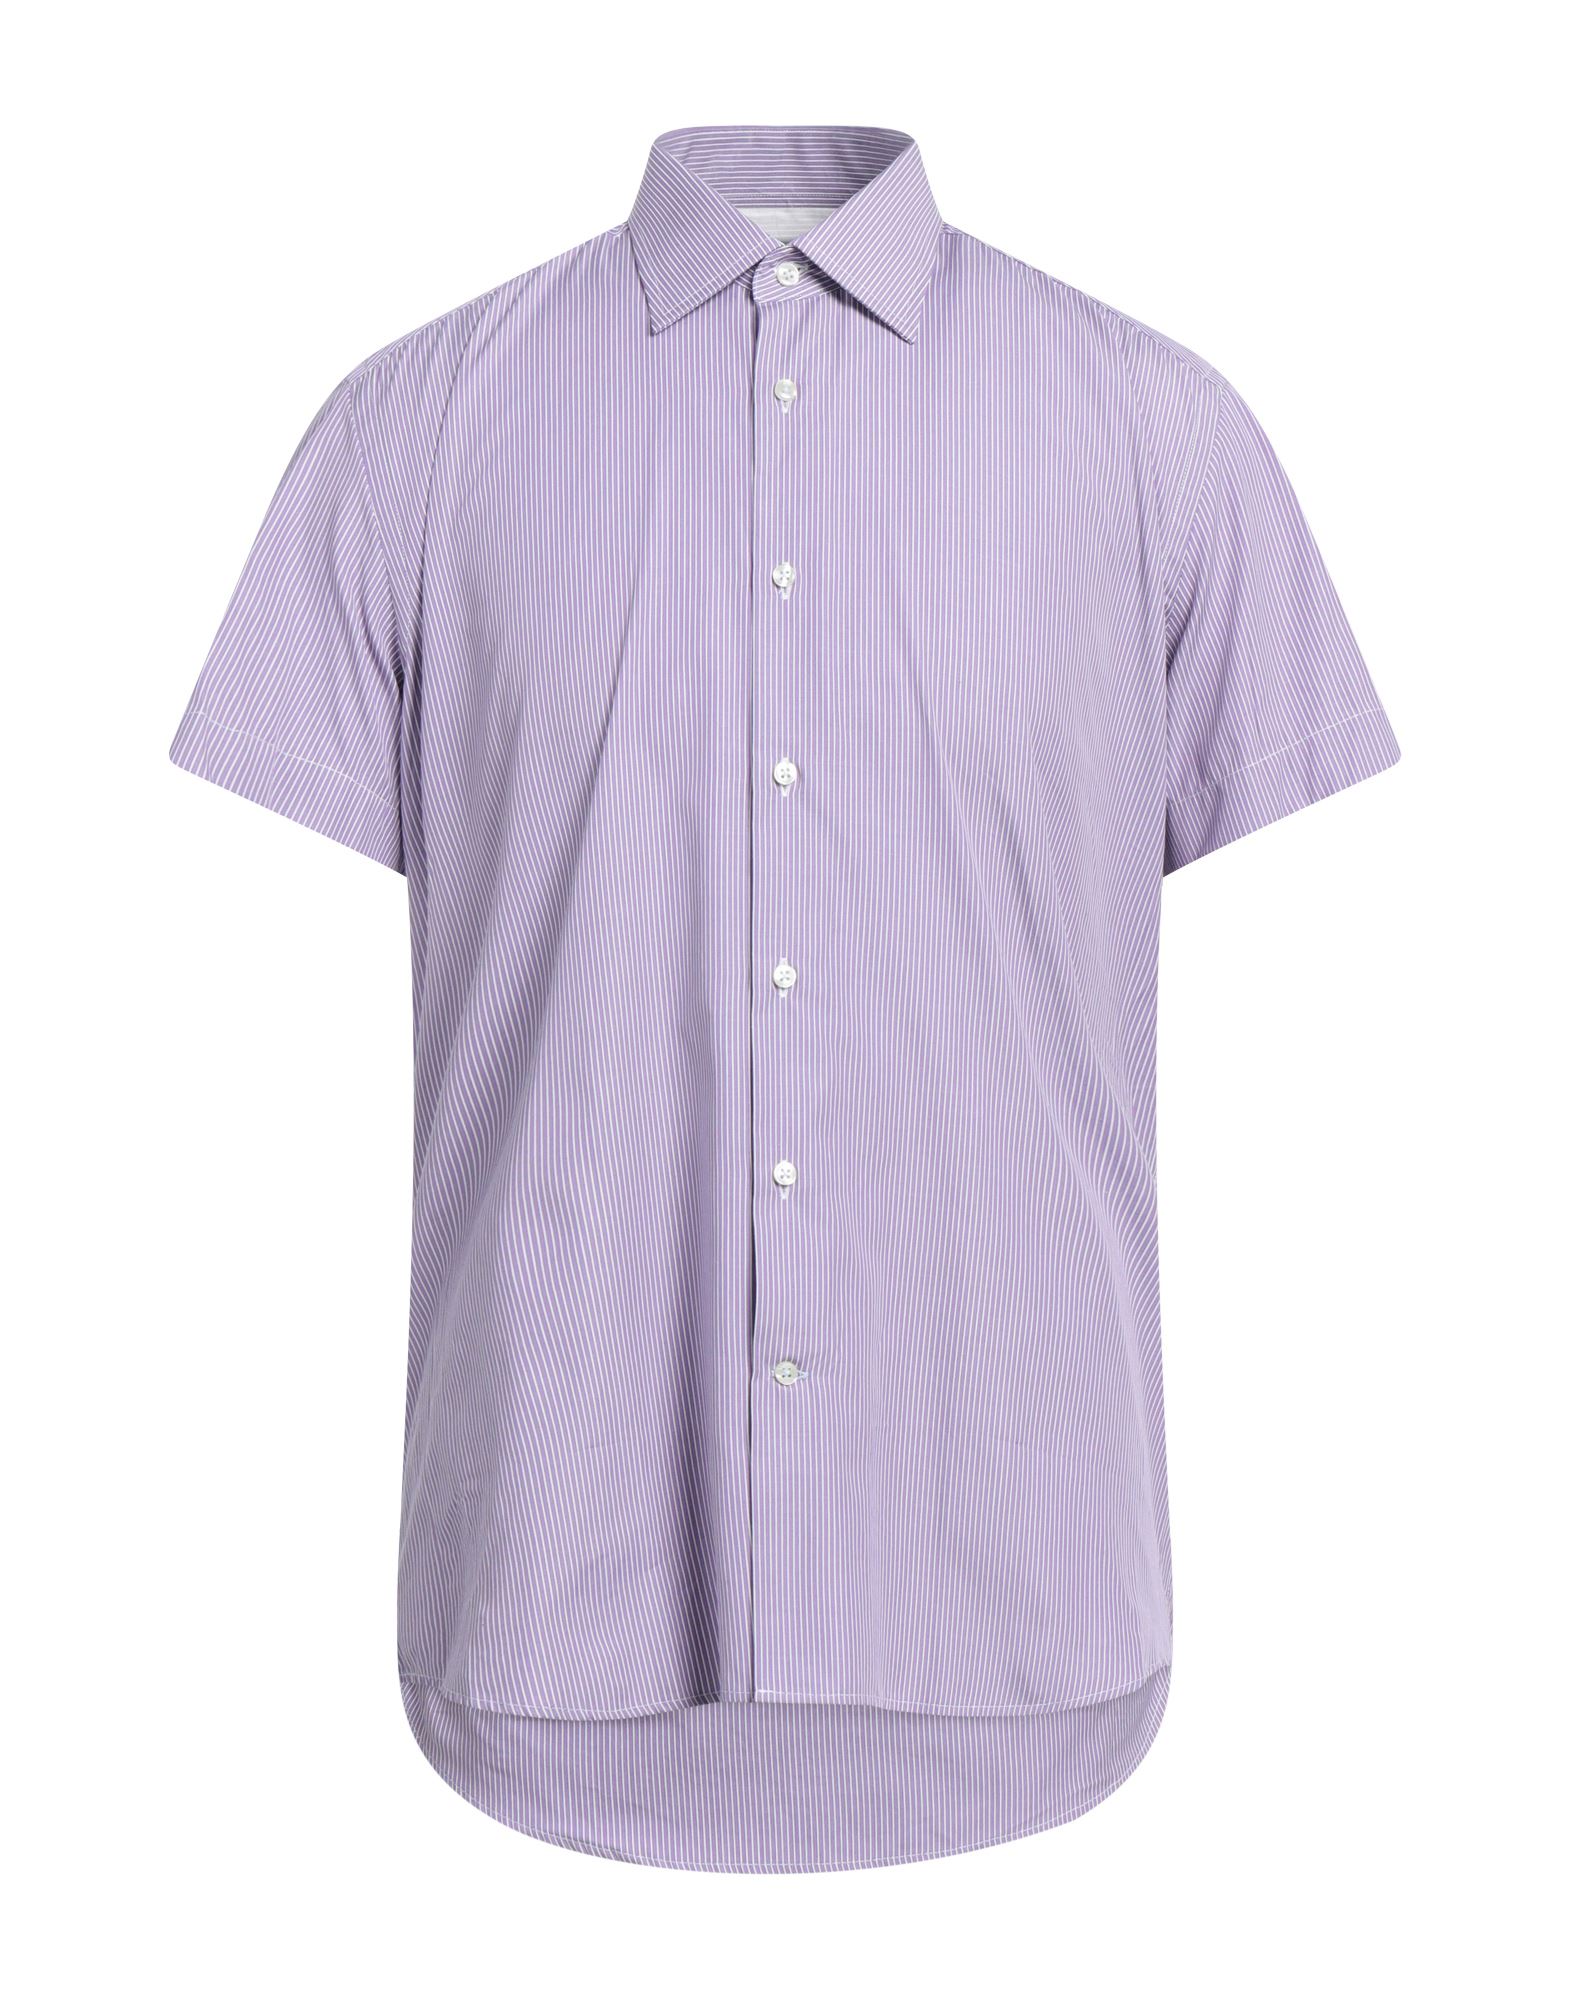 Ken Barrell Shirts In Purple